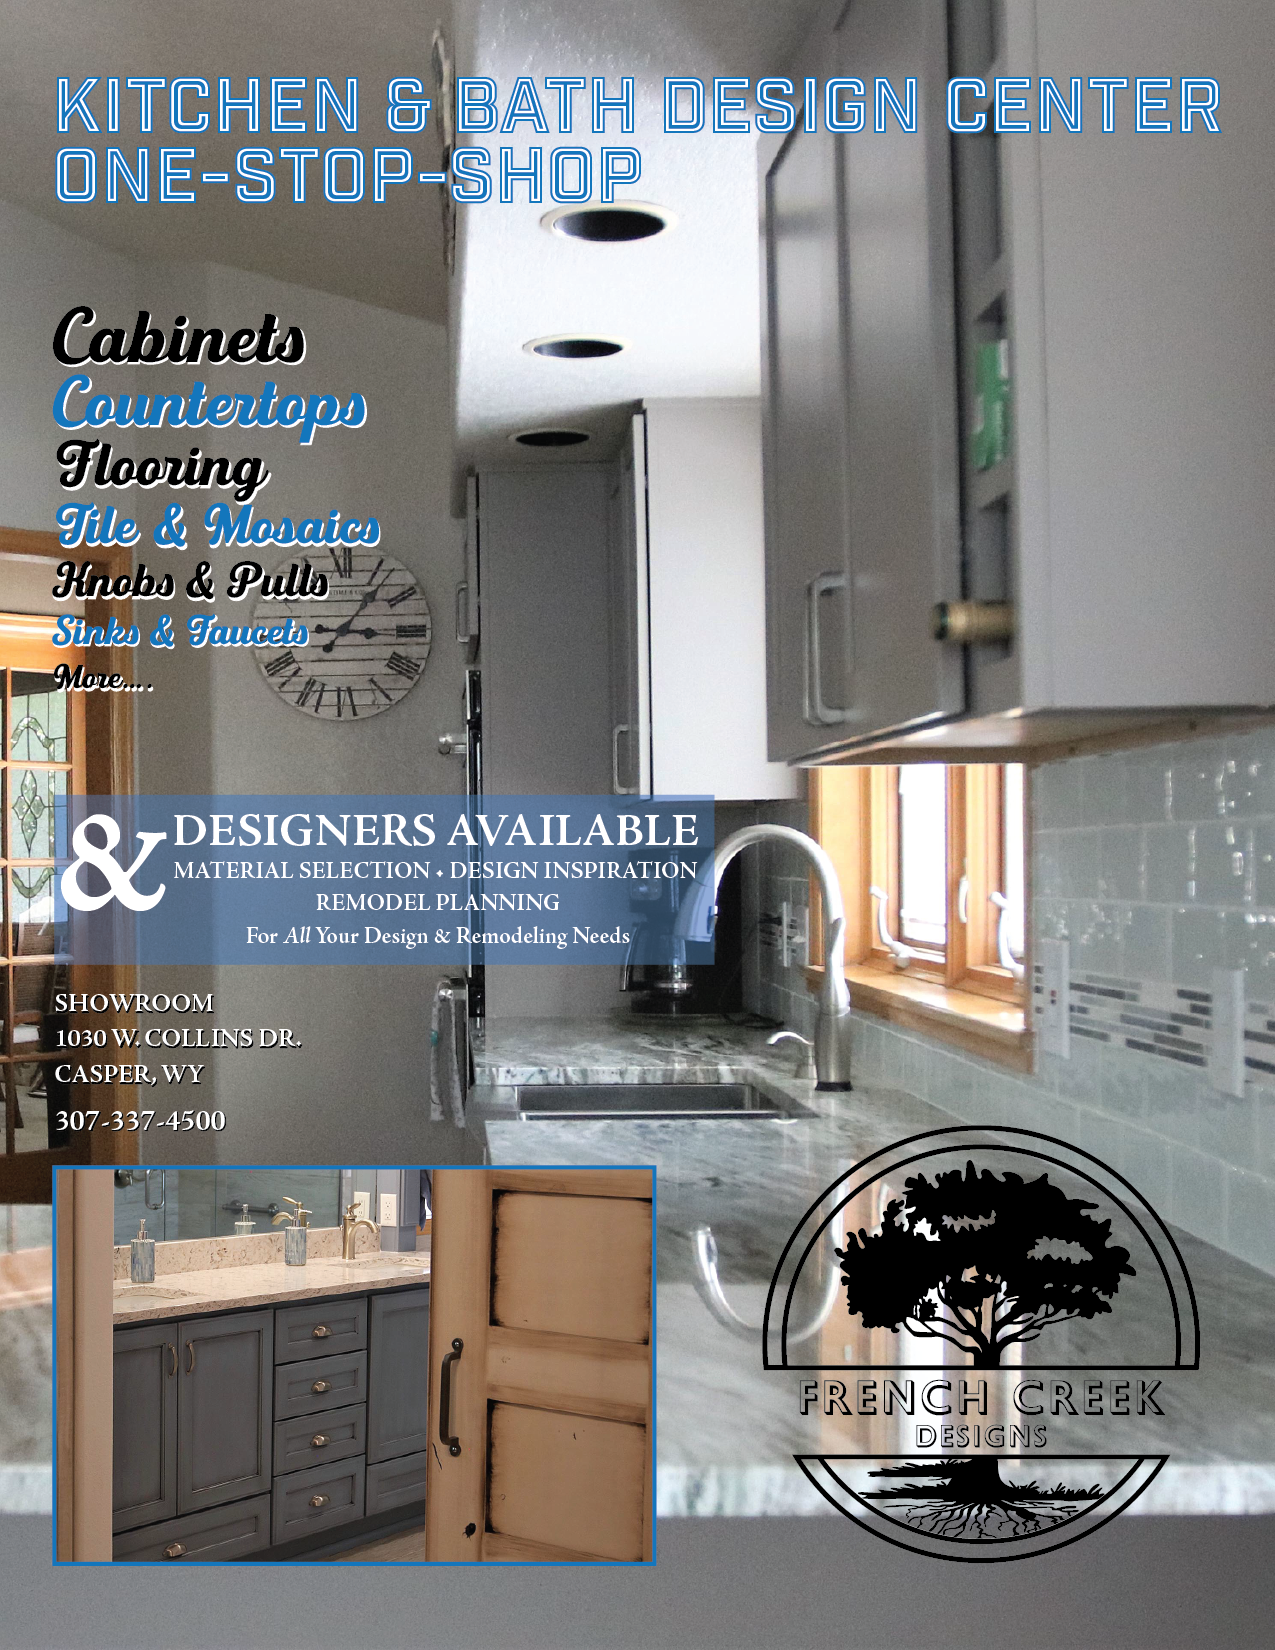 Casper’s Kitchen and Bath Design Center